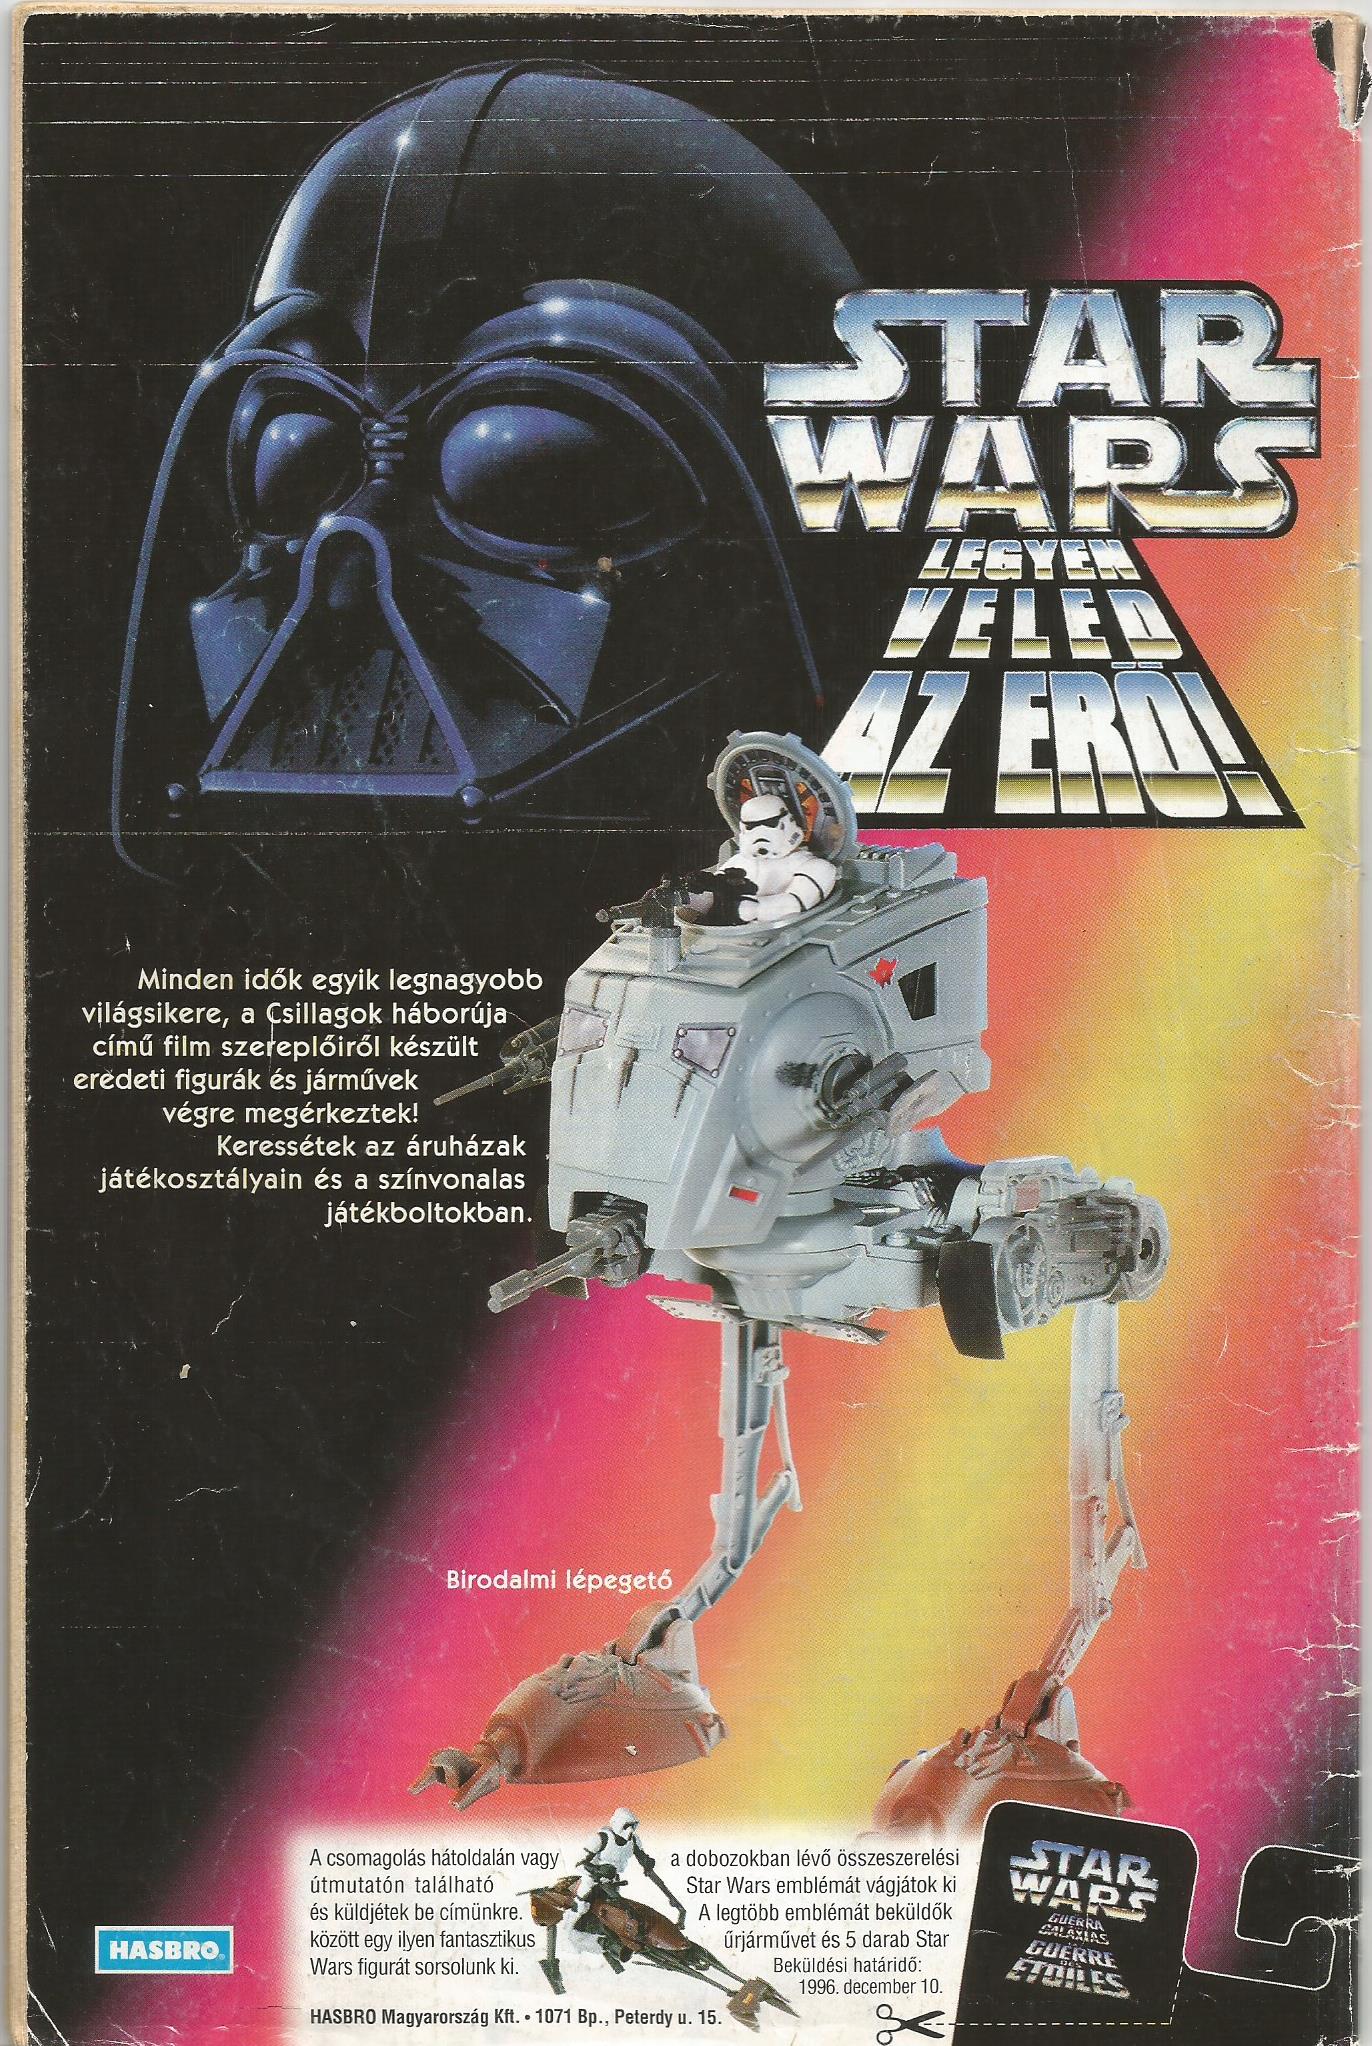 A Power of the Force (2) Star Wars figurák története 2.rész